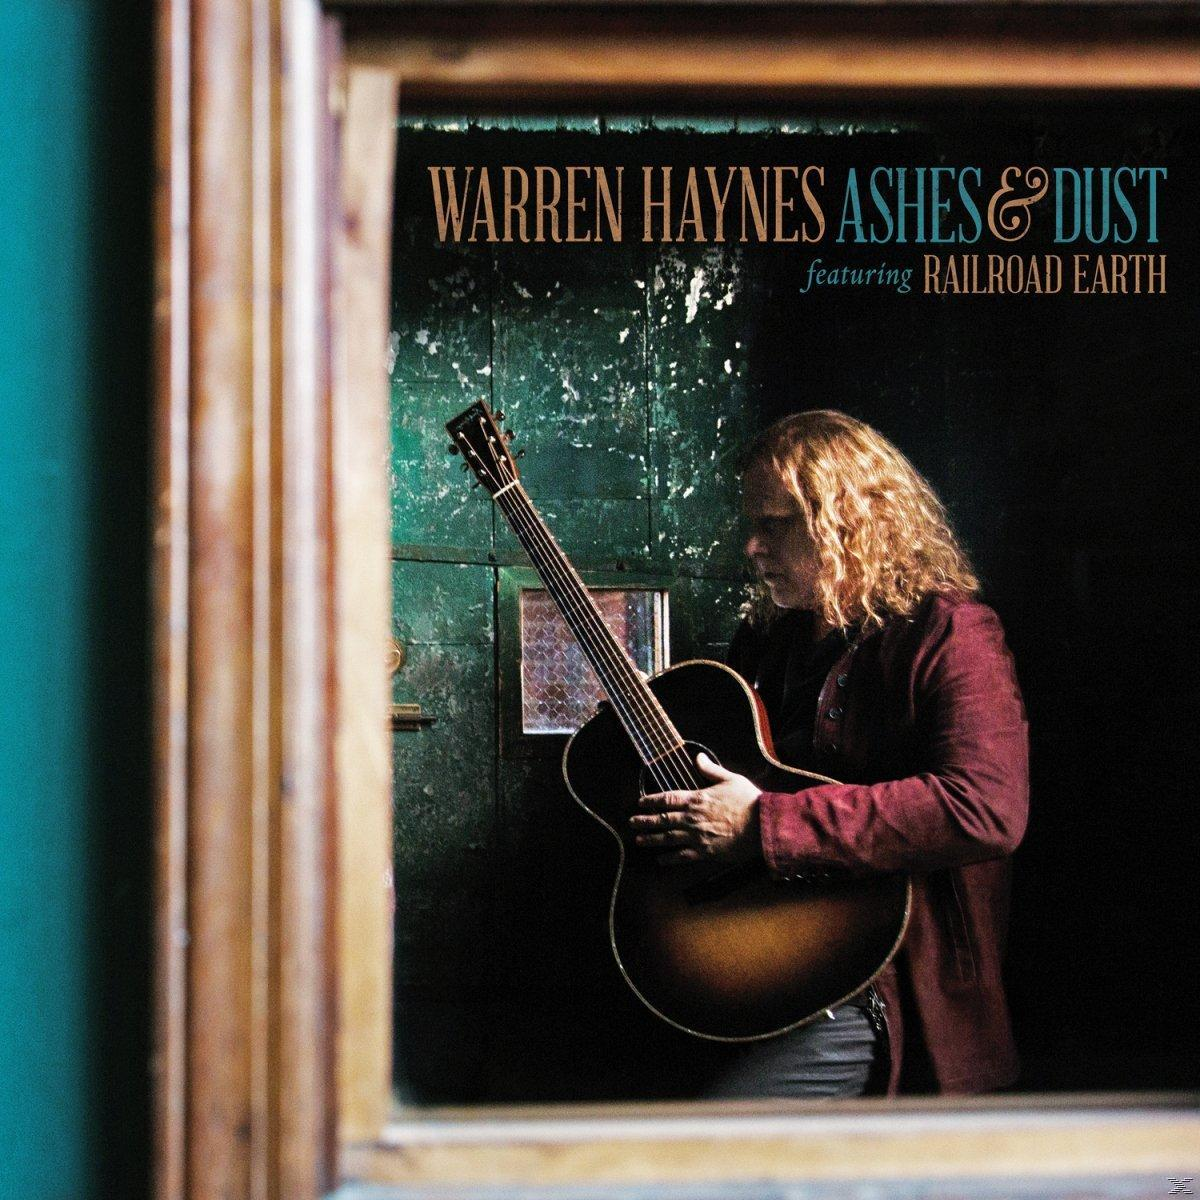 Railroad Deluxe - Dust Railroad Warren Earth Haynes, & - Ed. (CD) (Featuring Ashes Earth)